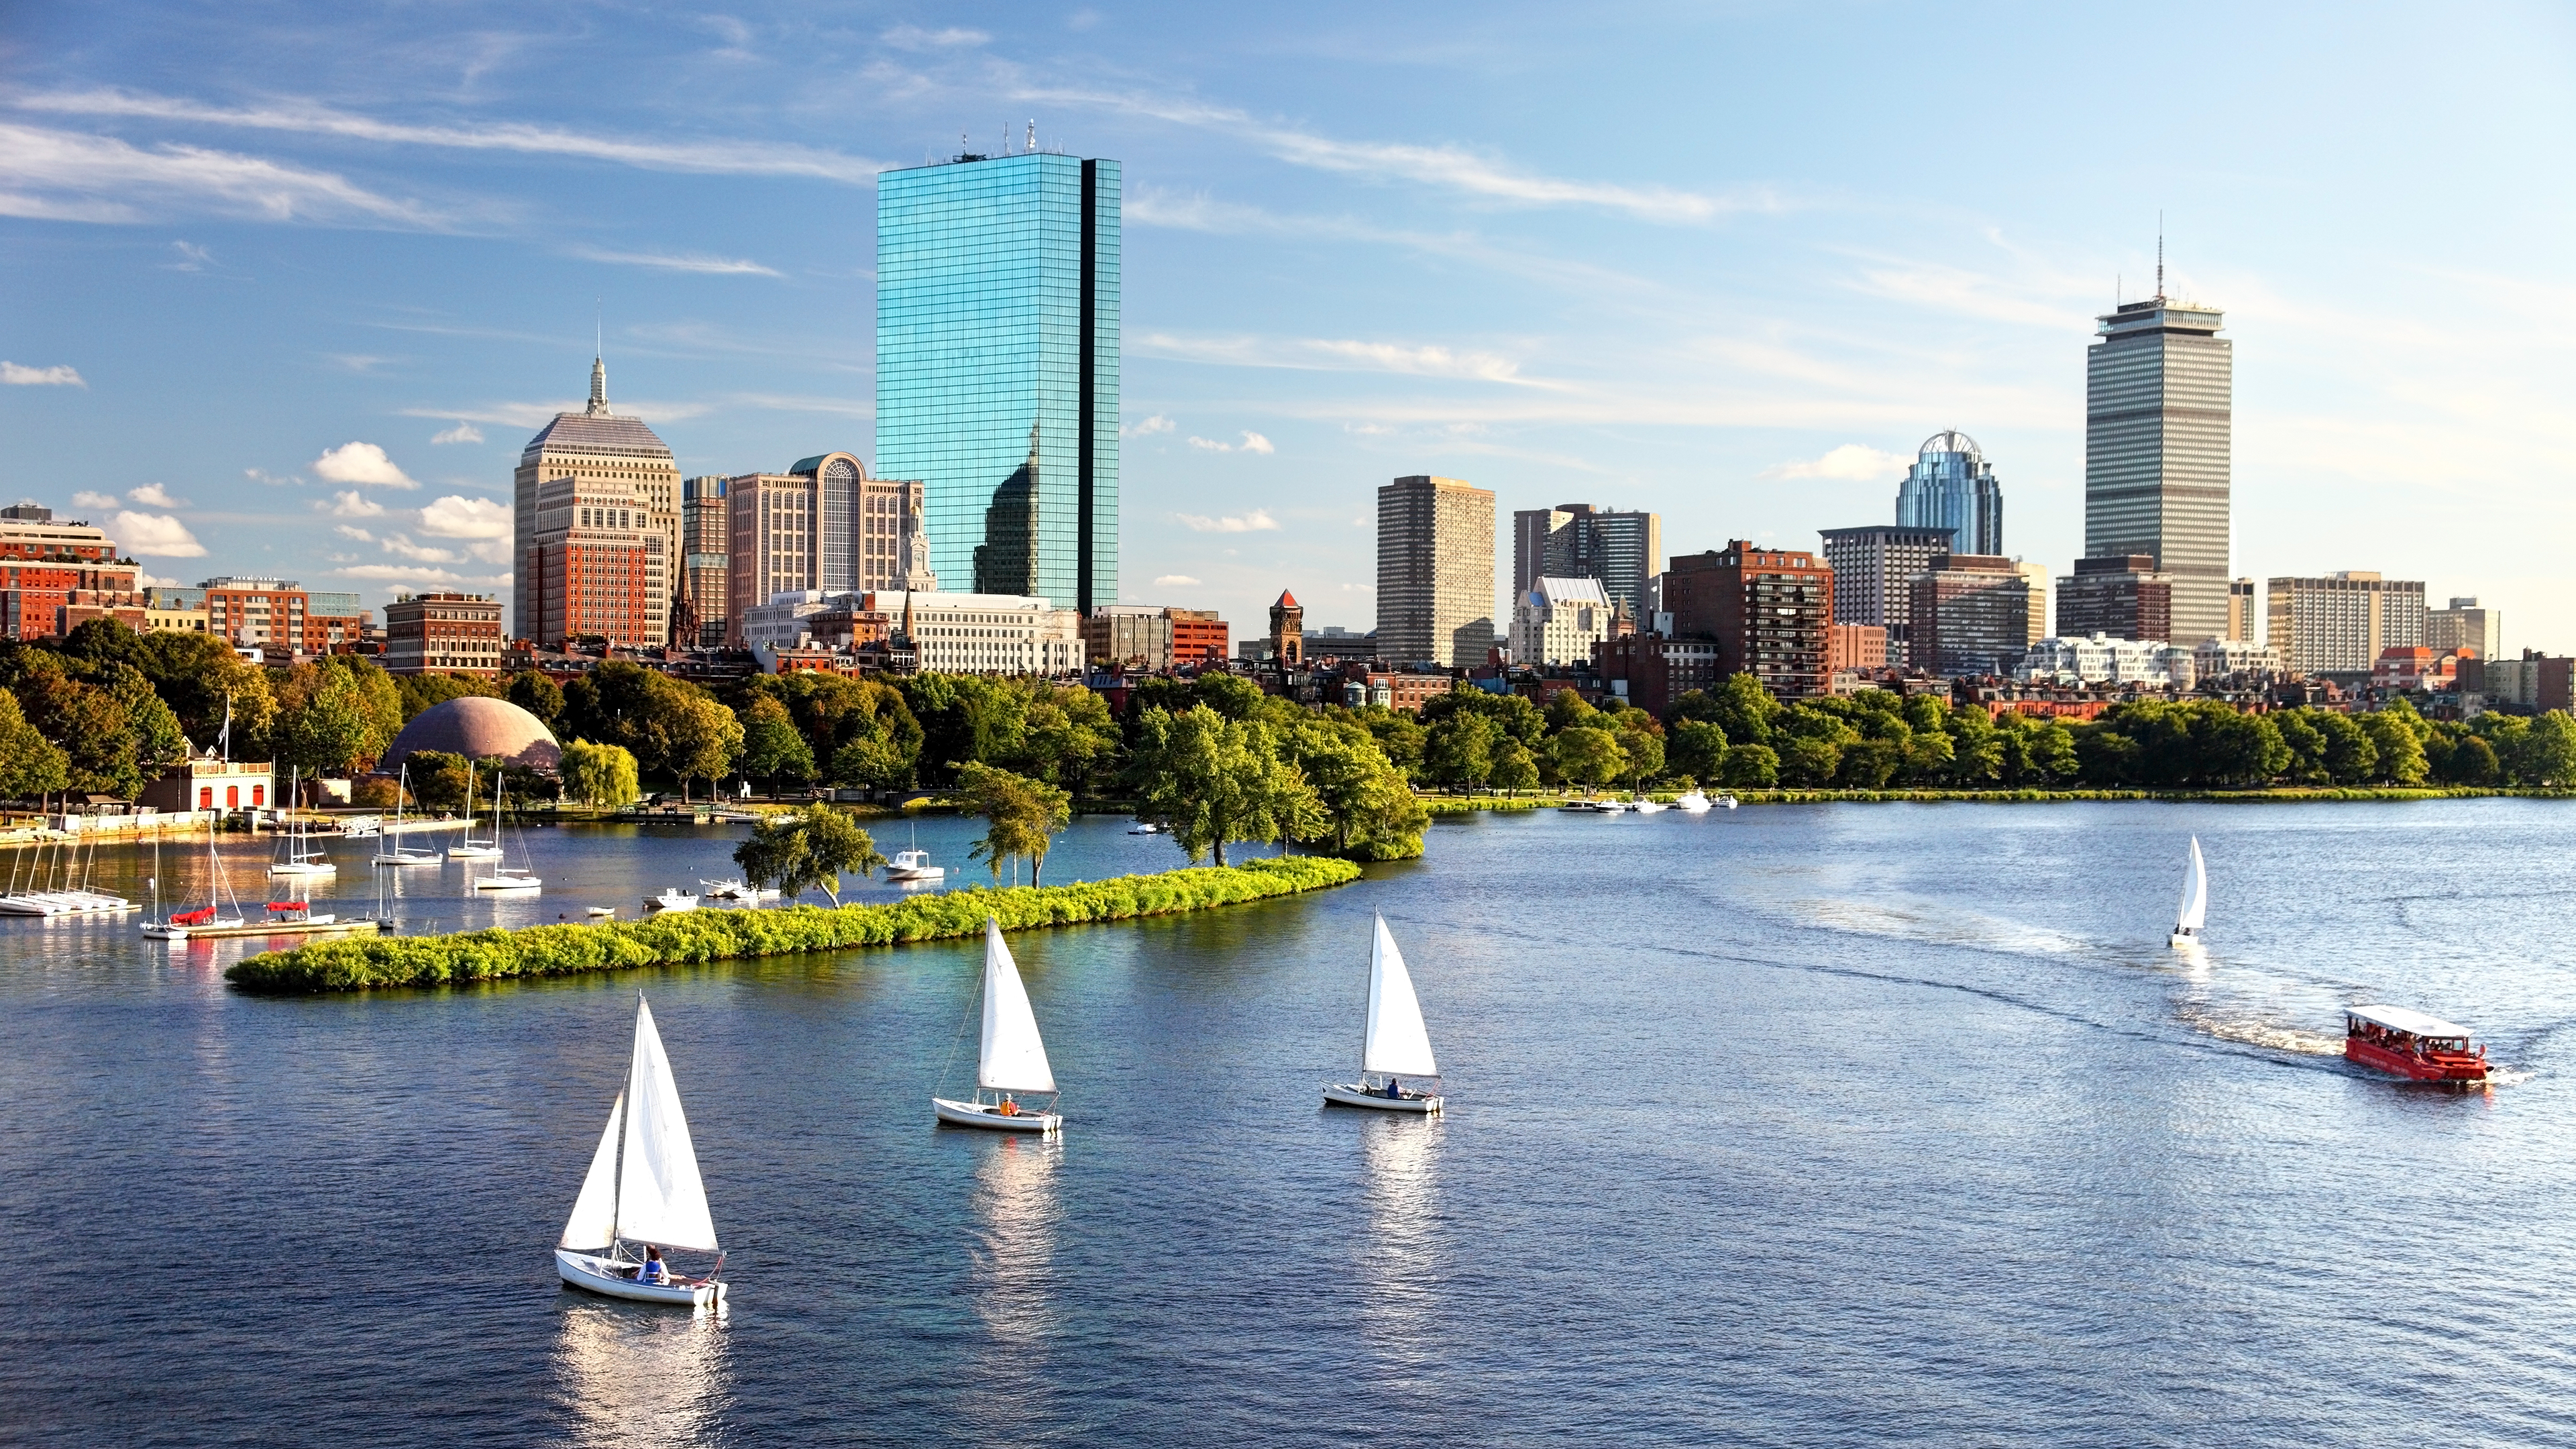 Image{width=3840, height=2160, url='https://www.avisystems.com/hubfs/website/locations/boston/avi-boston-ma-skyline.png'}